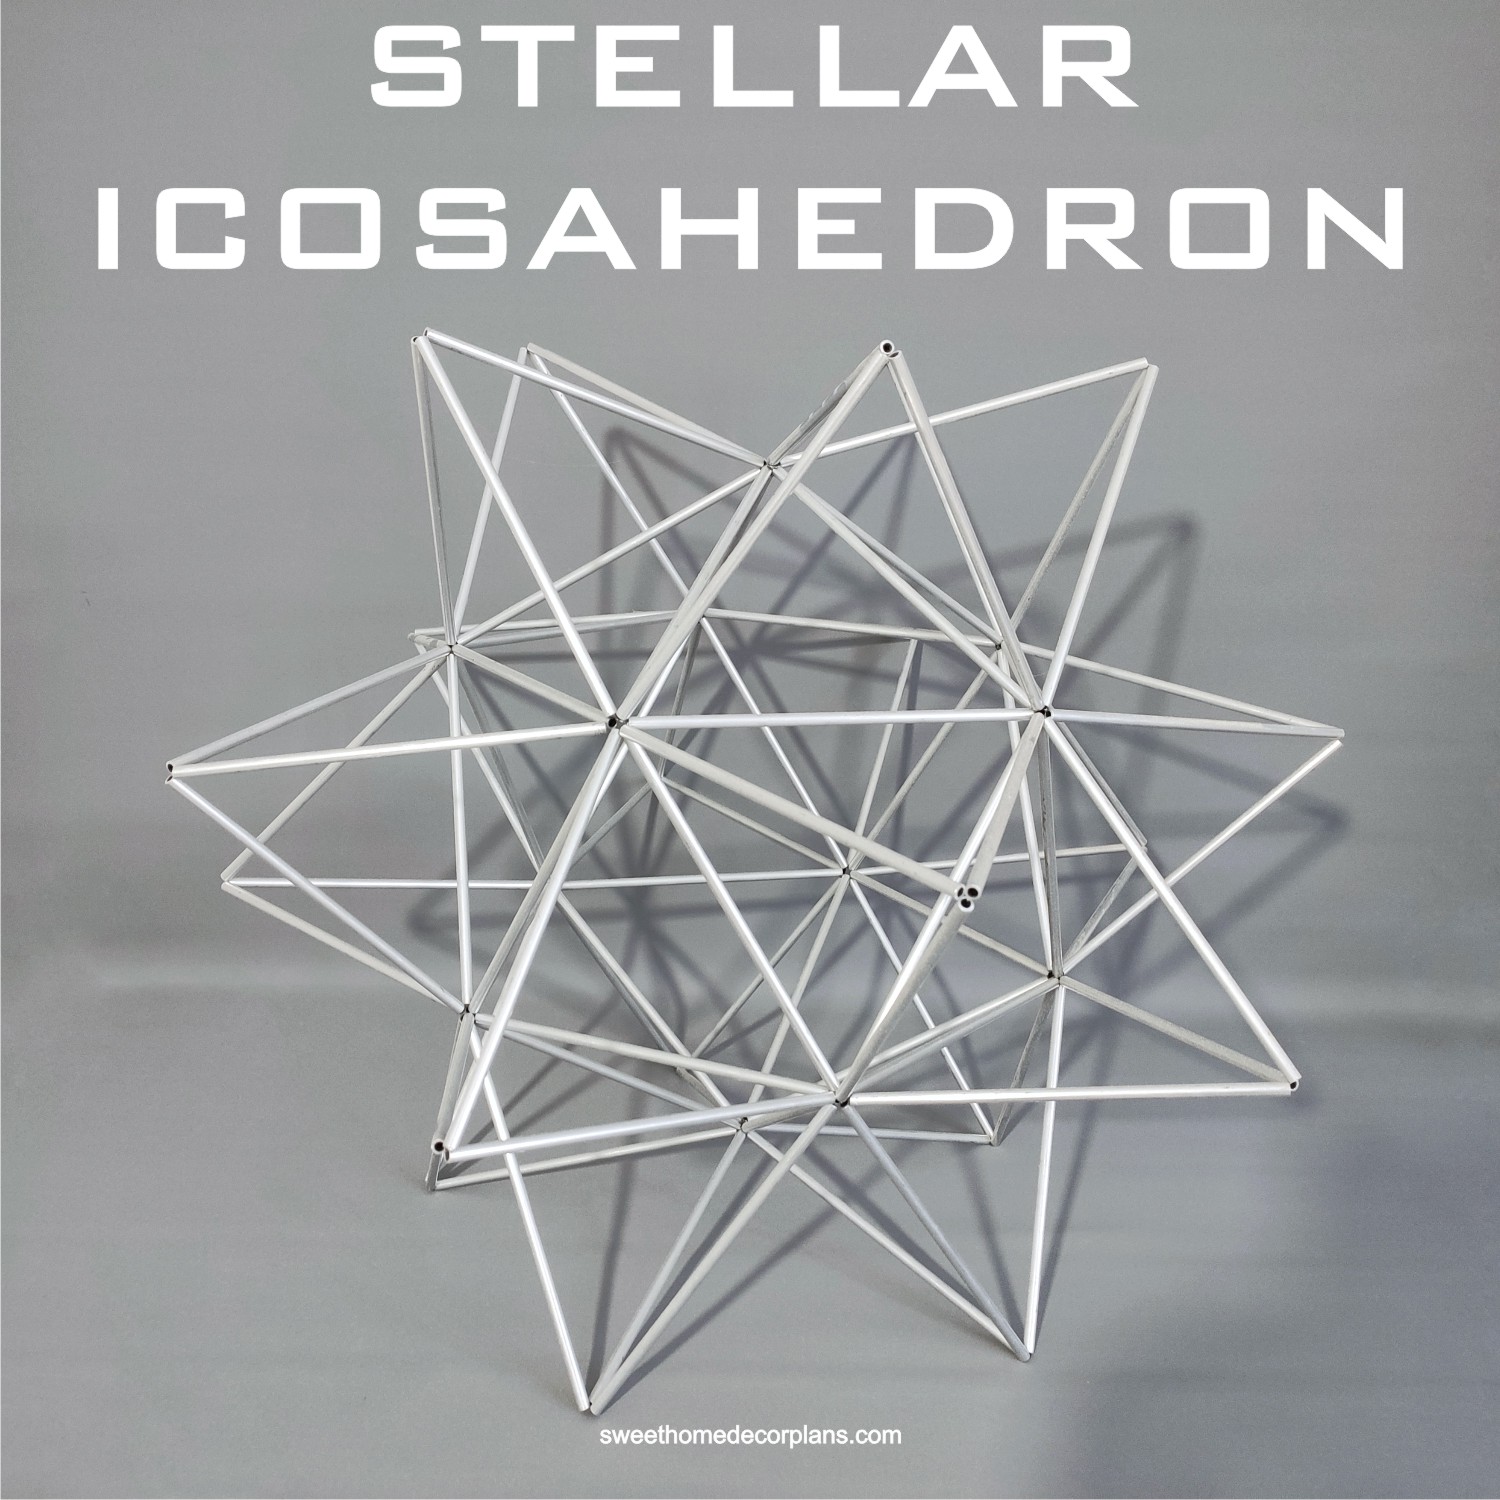 Diy-lampshade-geometric-stellar-icosahedron-himmeli- in-pdf-for-wedding-and-home-decor